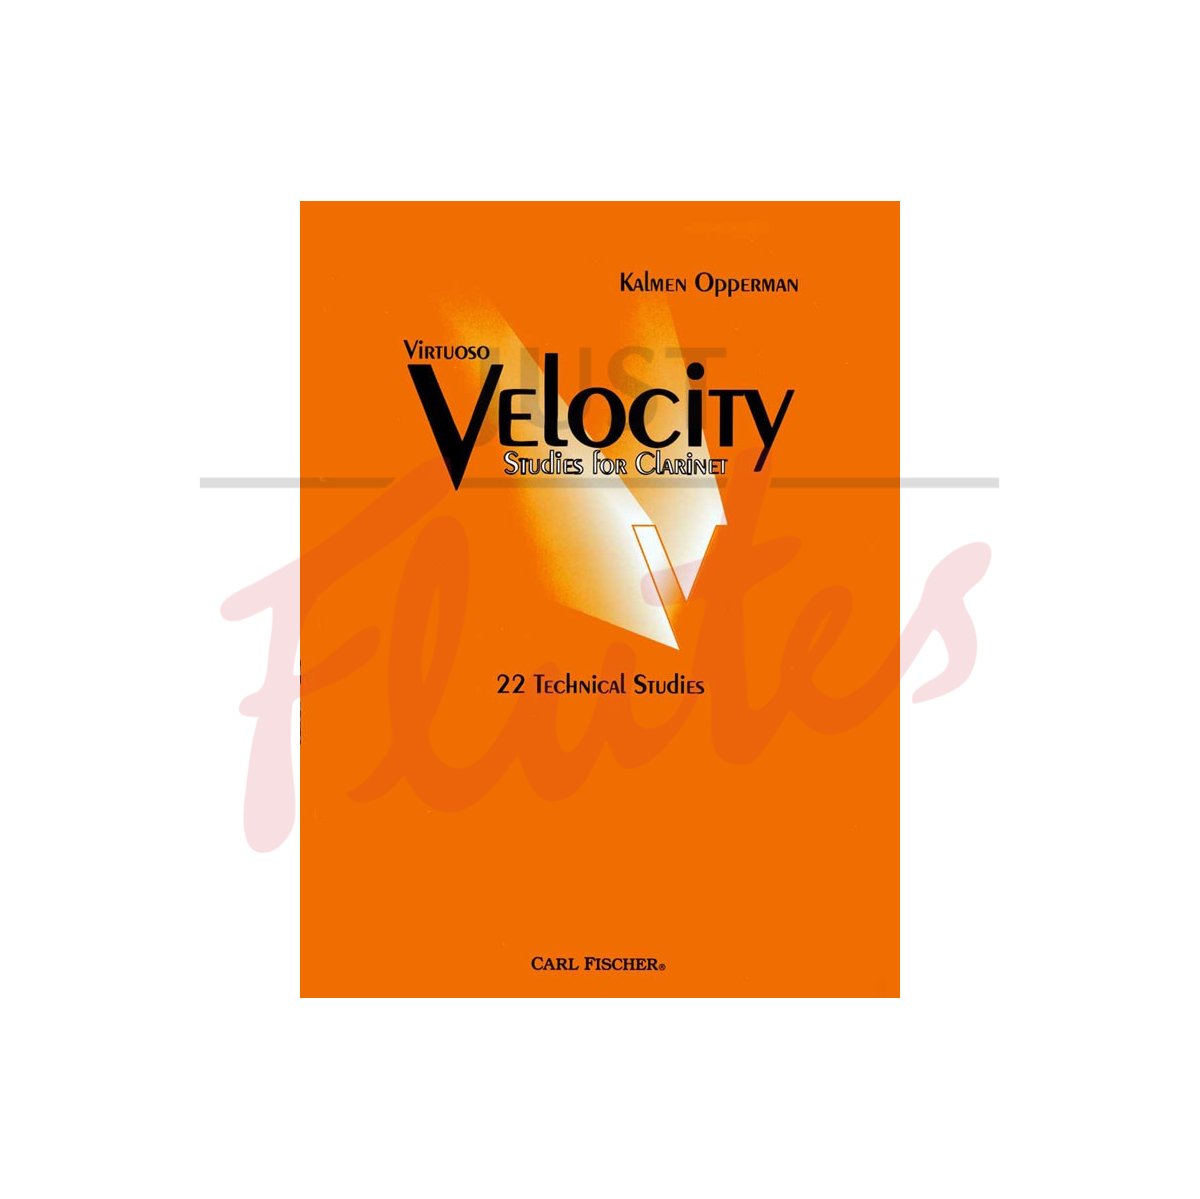 Virtuoso Velocity Studies for Clarinet: 22 Technical Studies